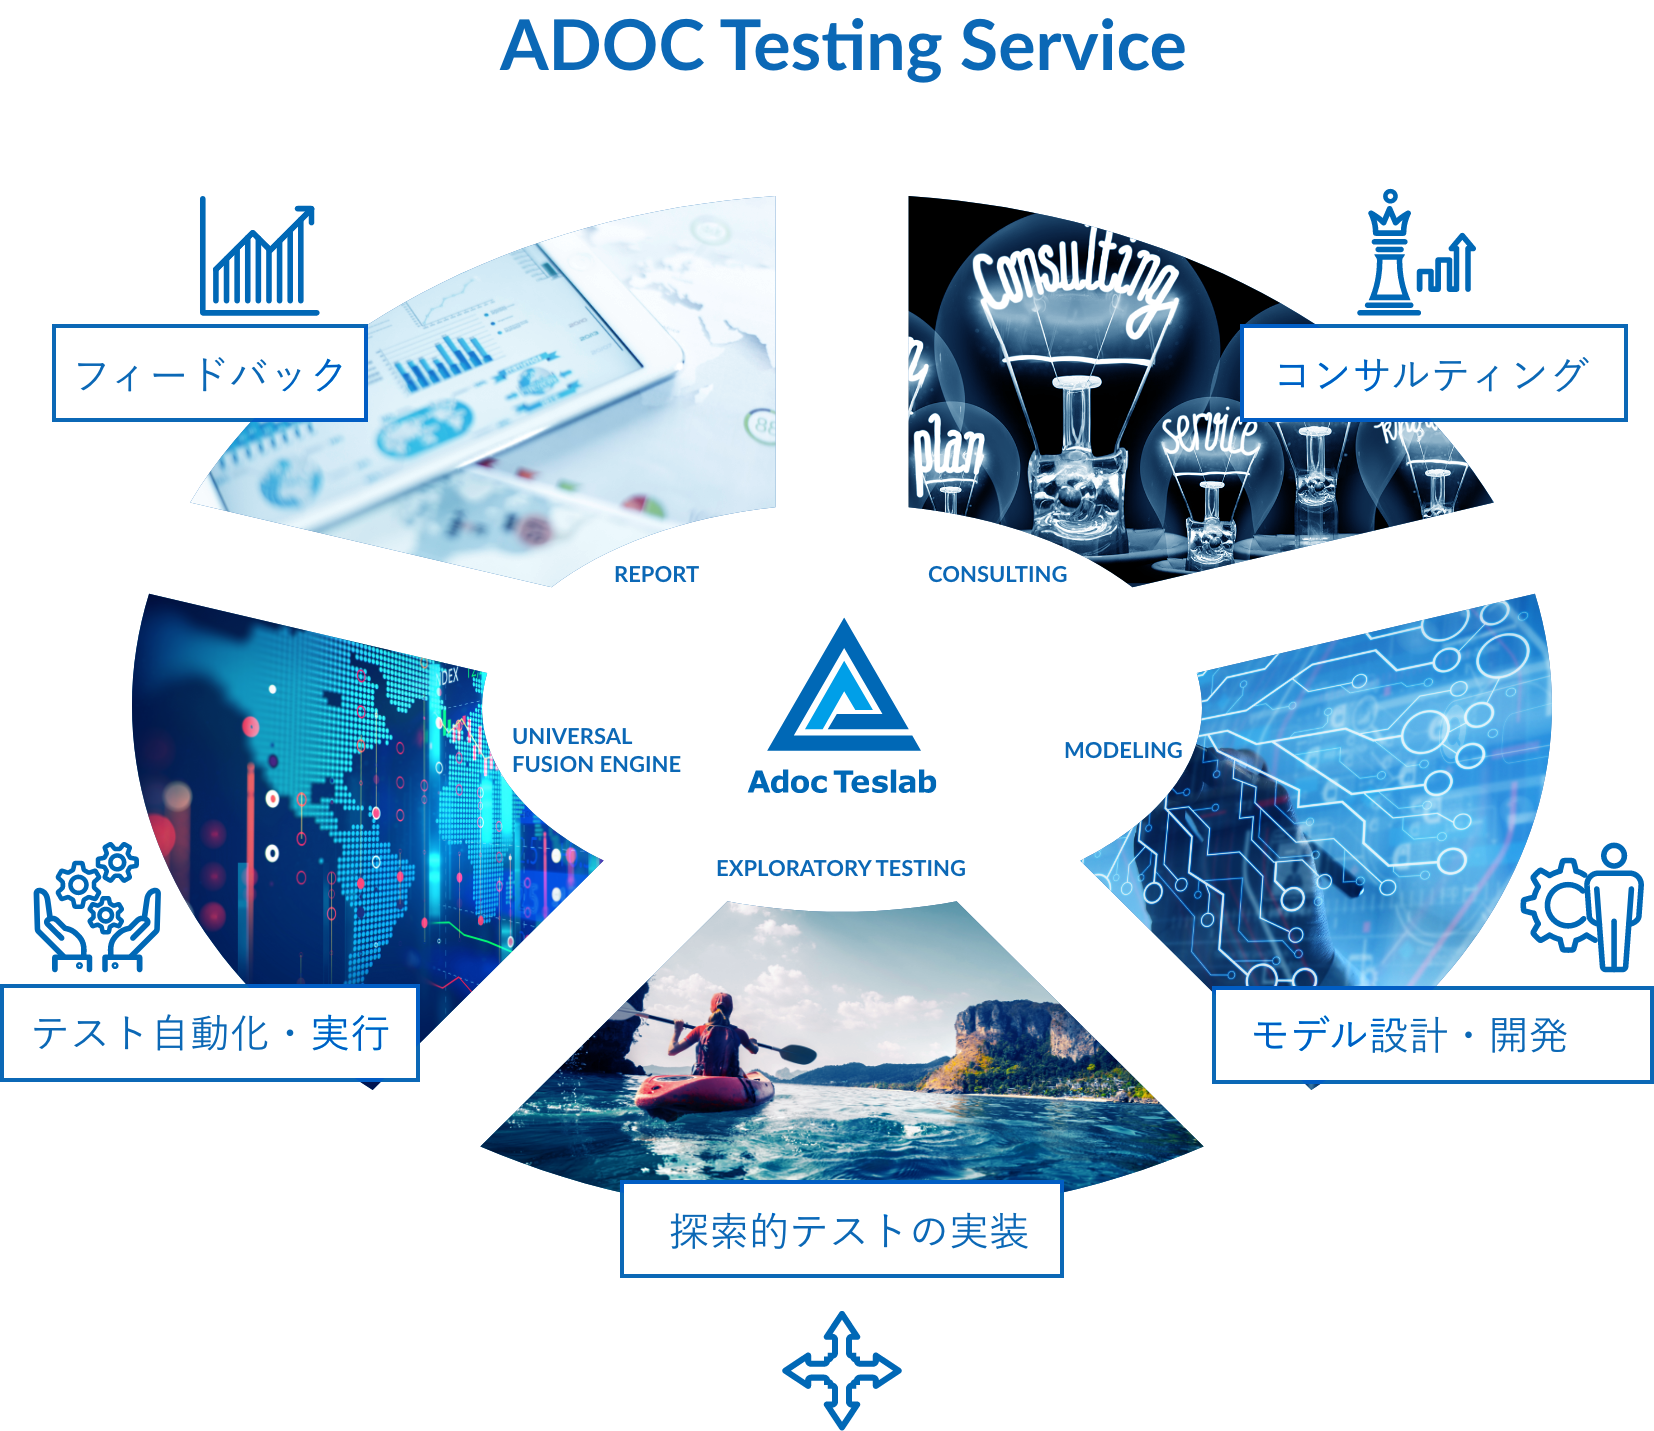 ADOC Testing Service (ATS) 概略図